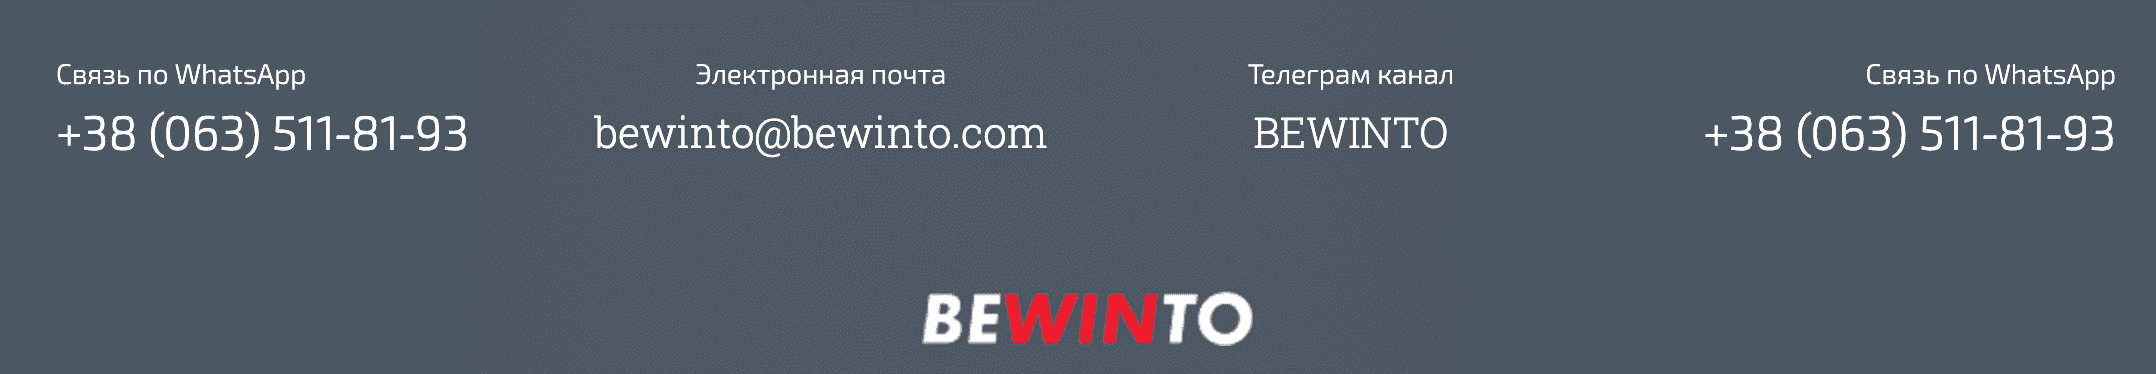 Контакты на сайте Bewinto(Бевинто)